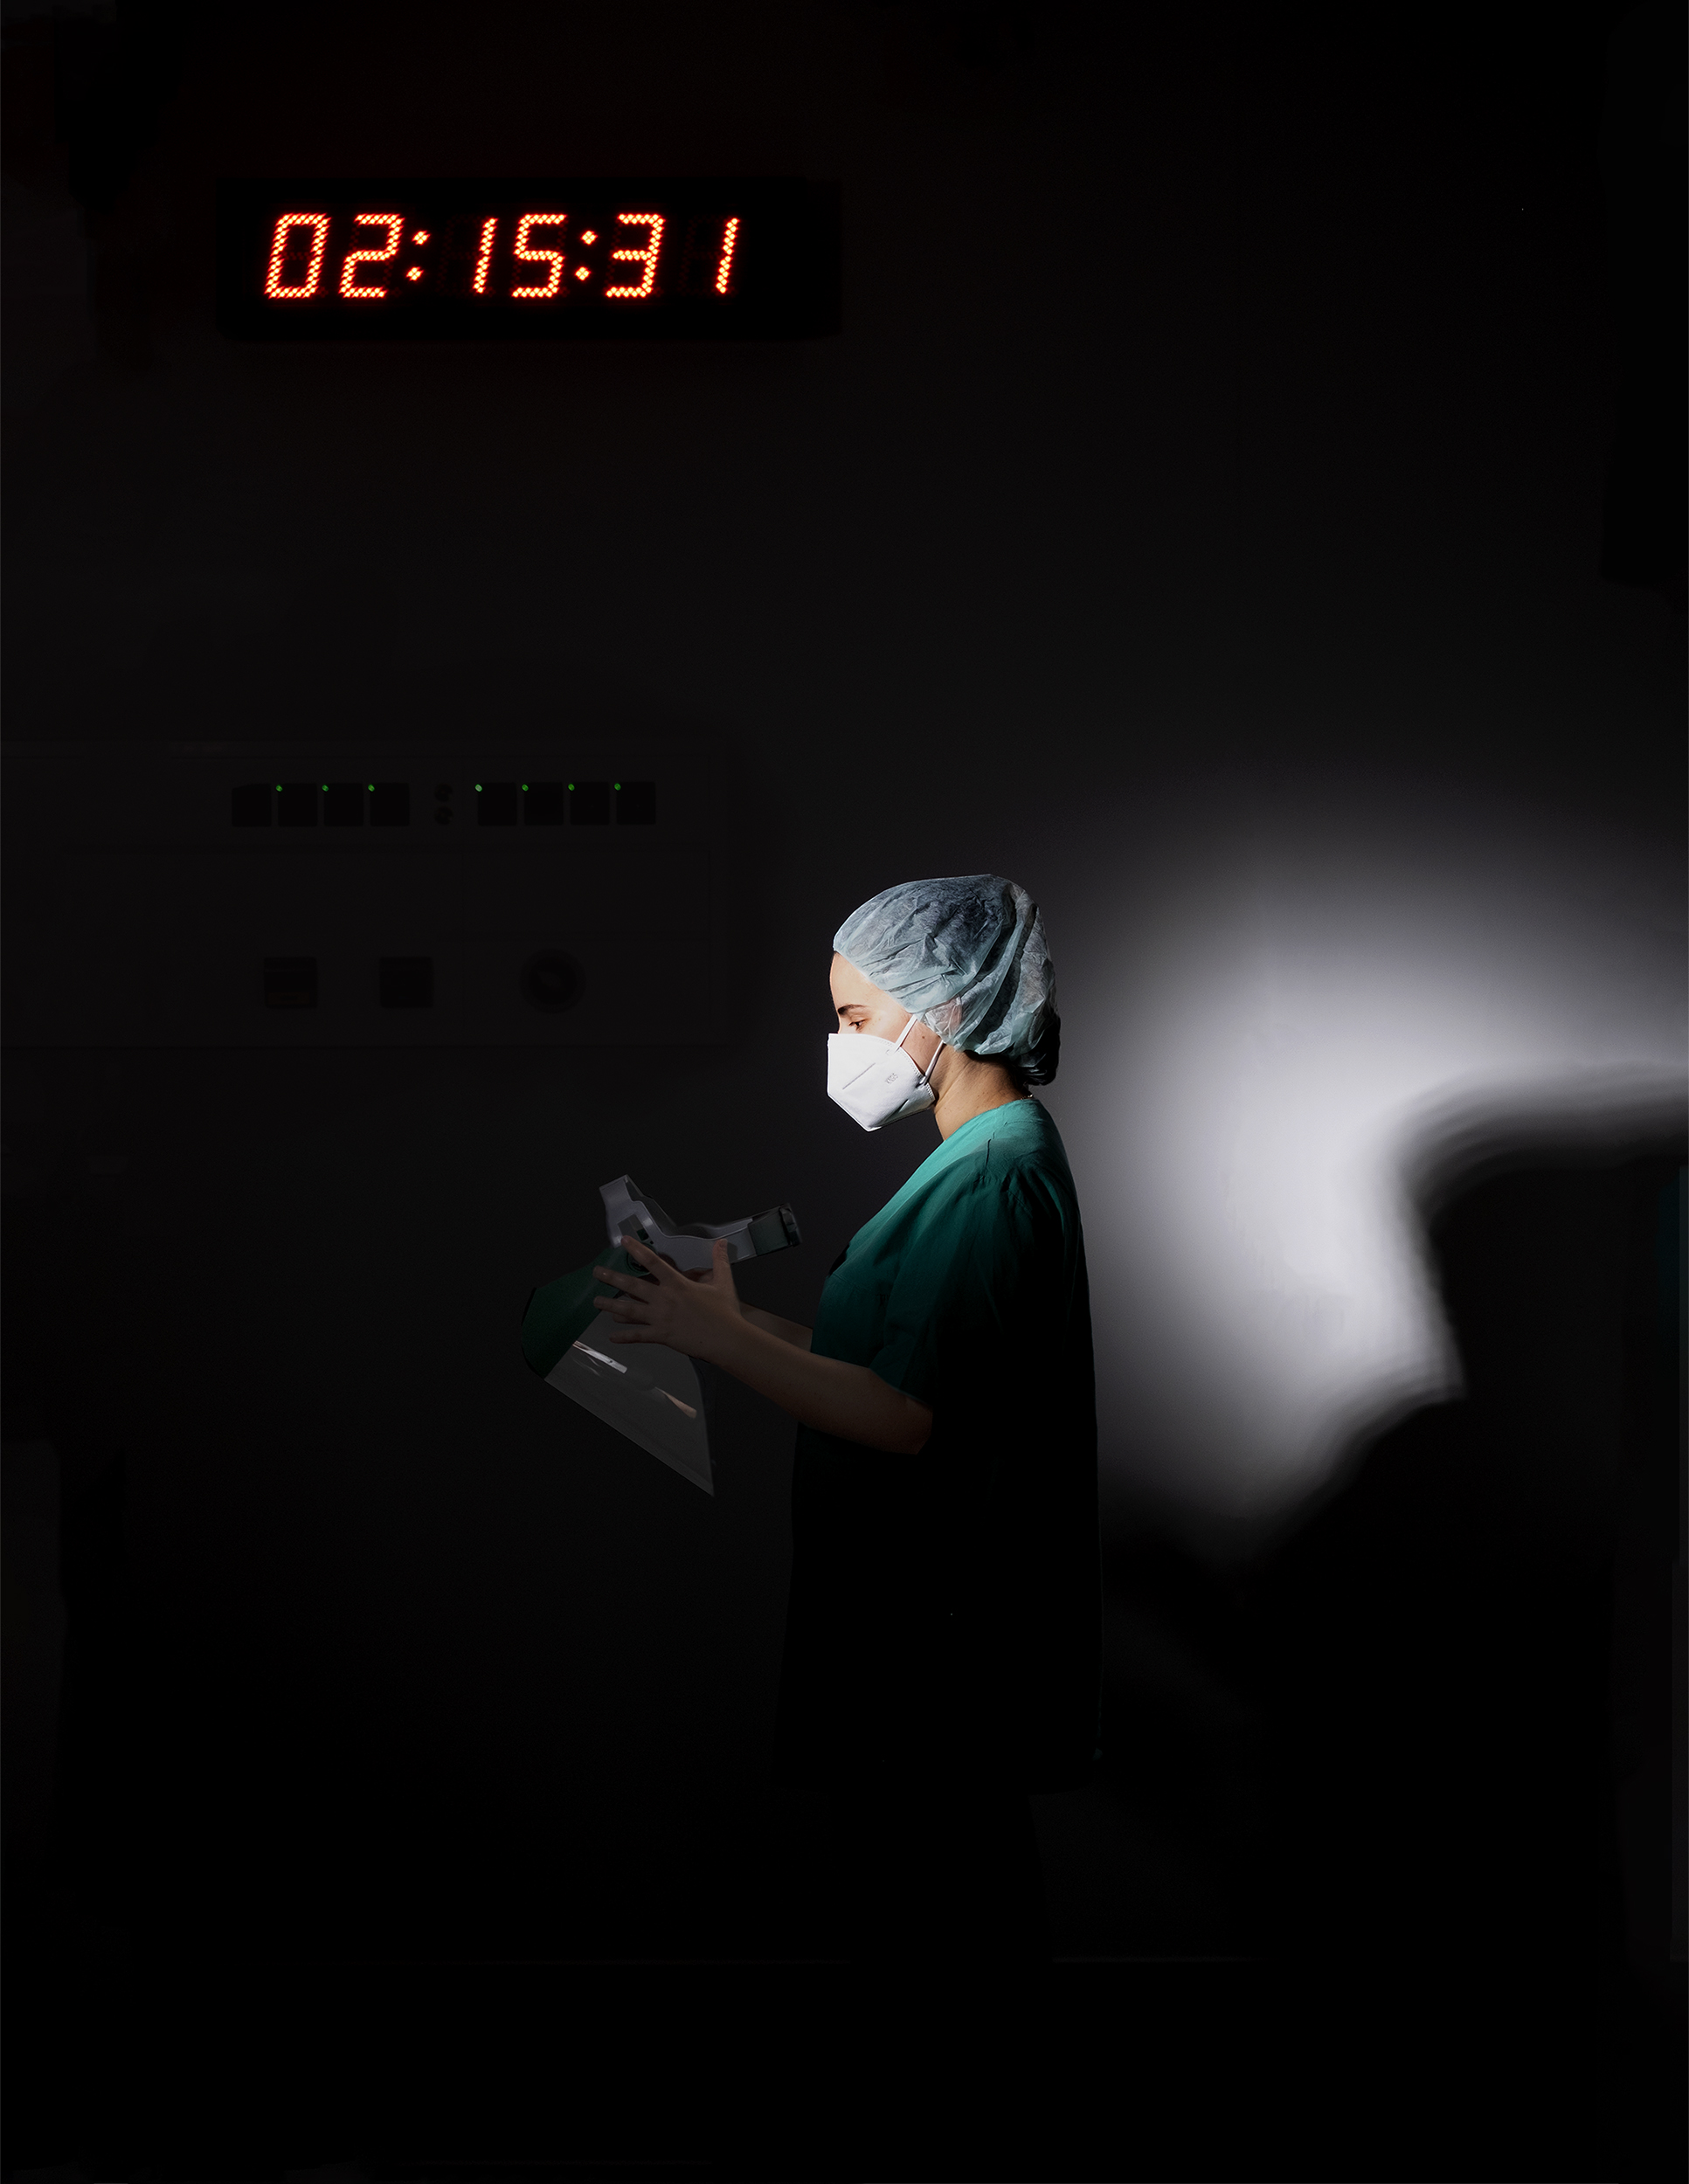 Enfermeira de perfil em ambiente escuro com máscara e touca, segura viseira.